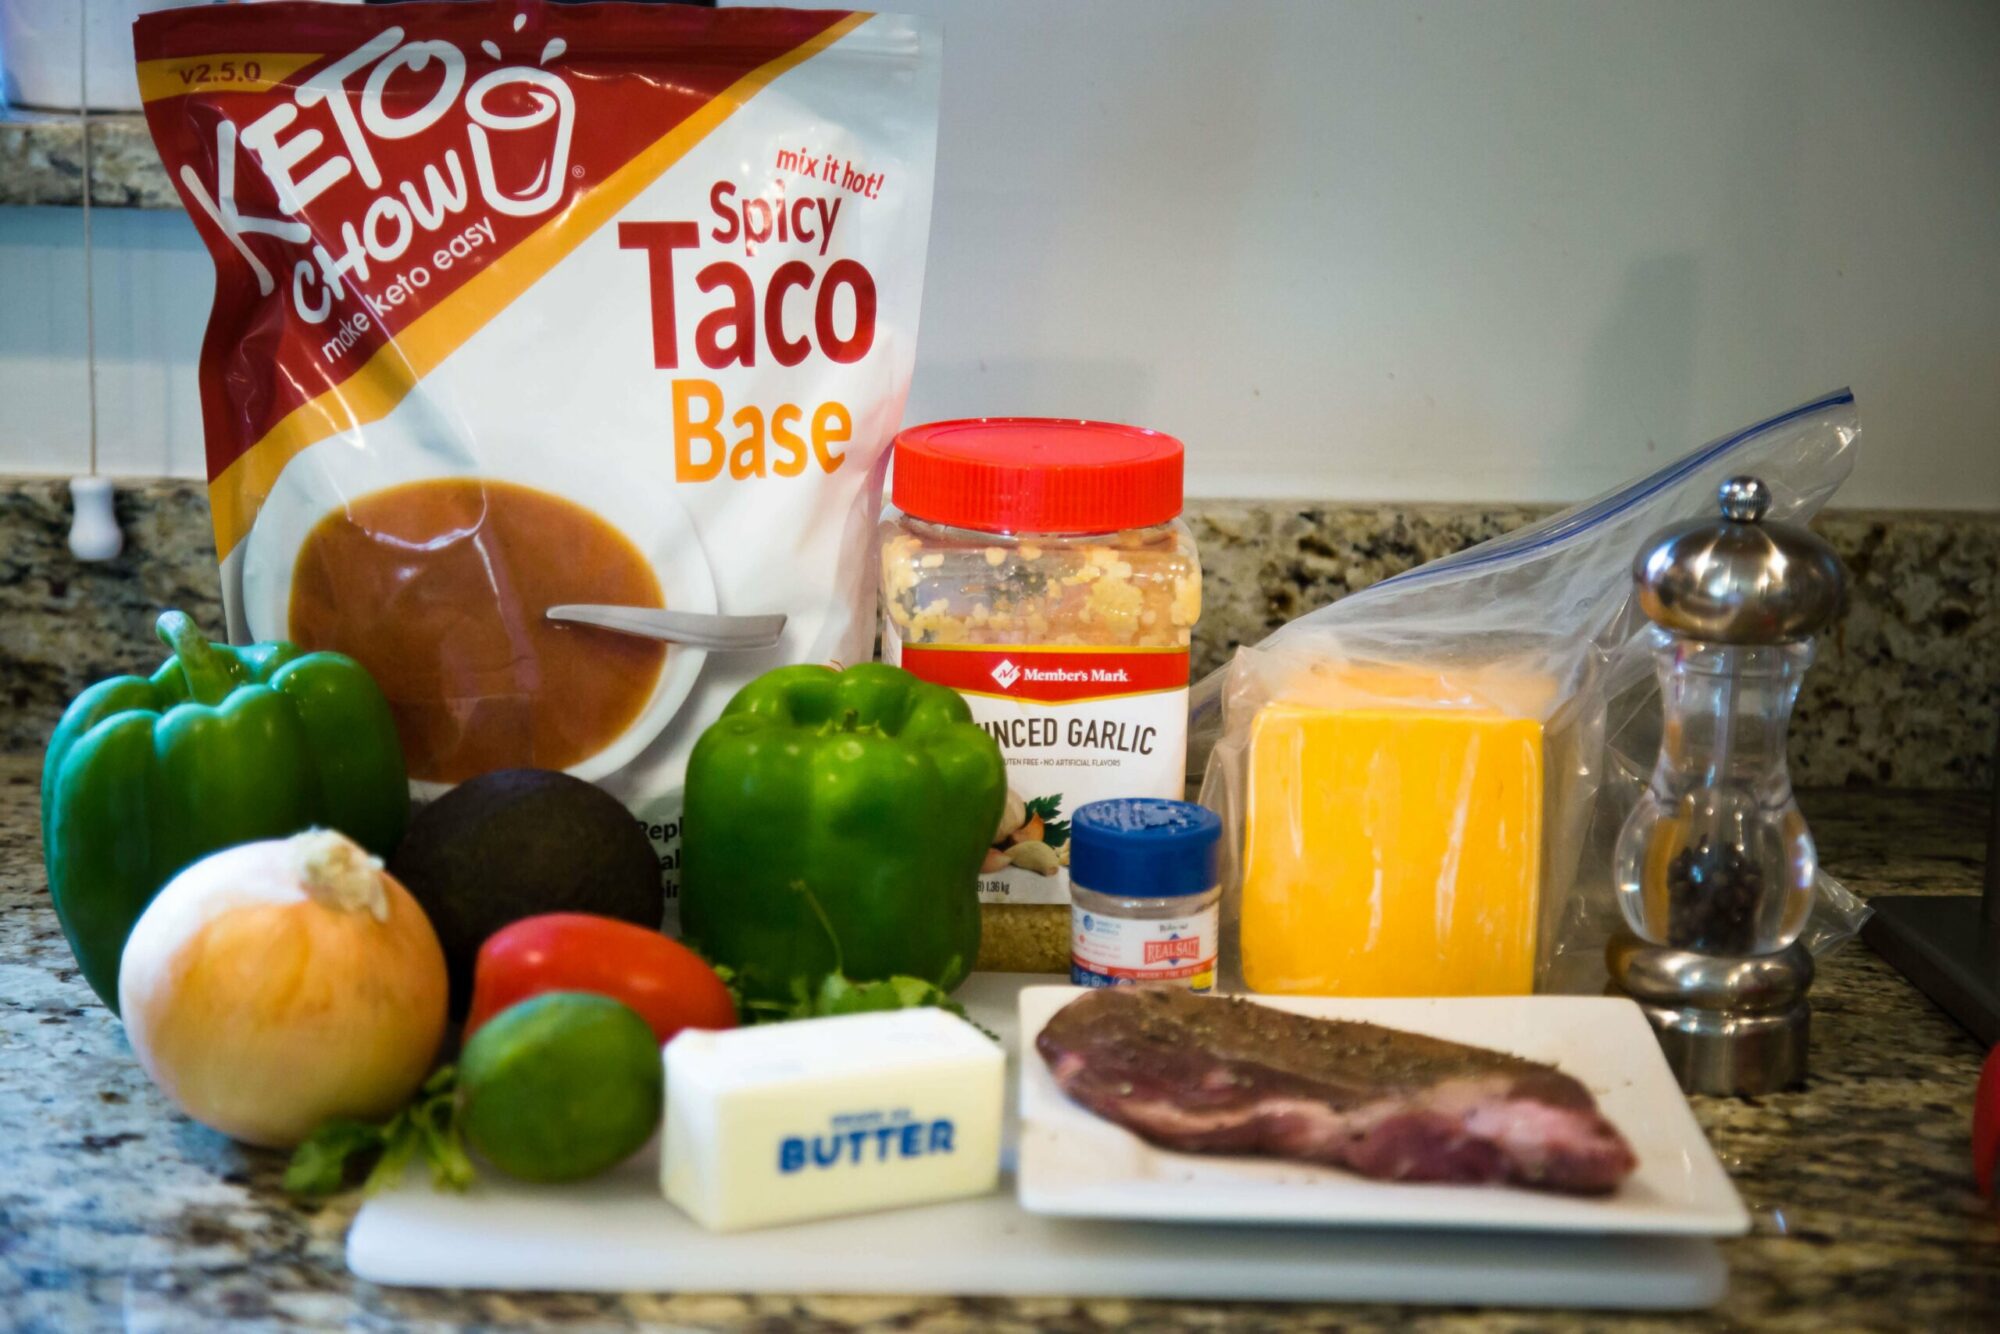 spicy taco base 21 meal bulk bag, Member's Mark minced garlic, Butter